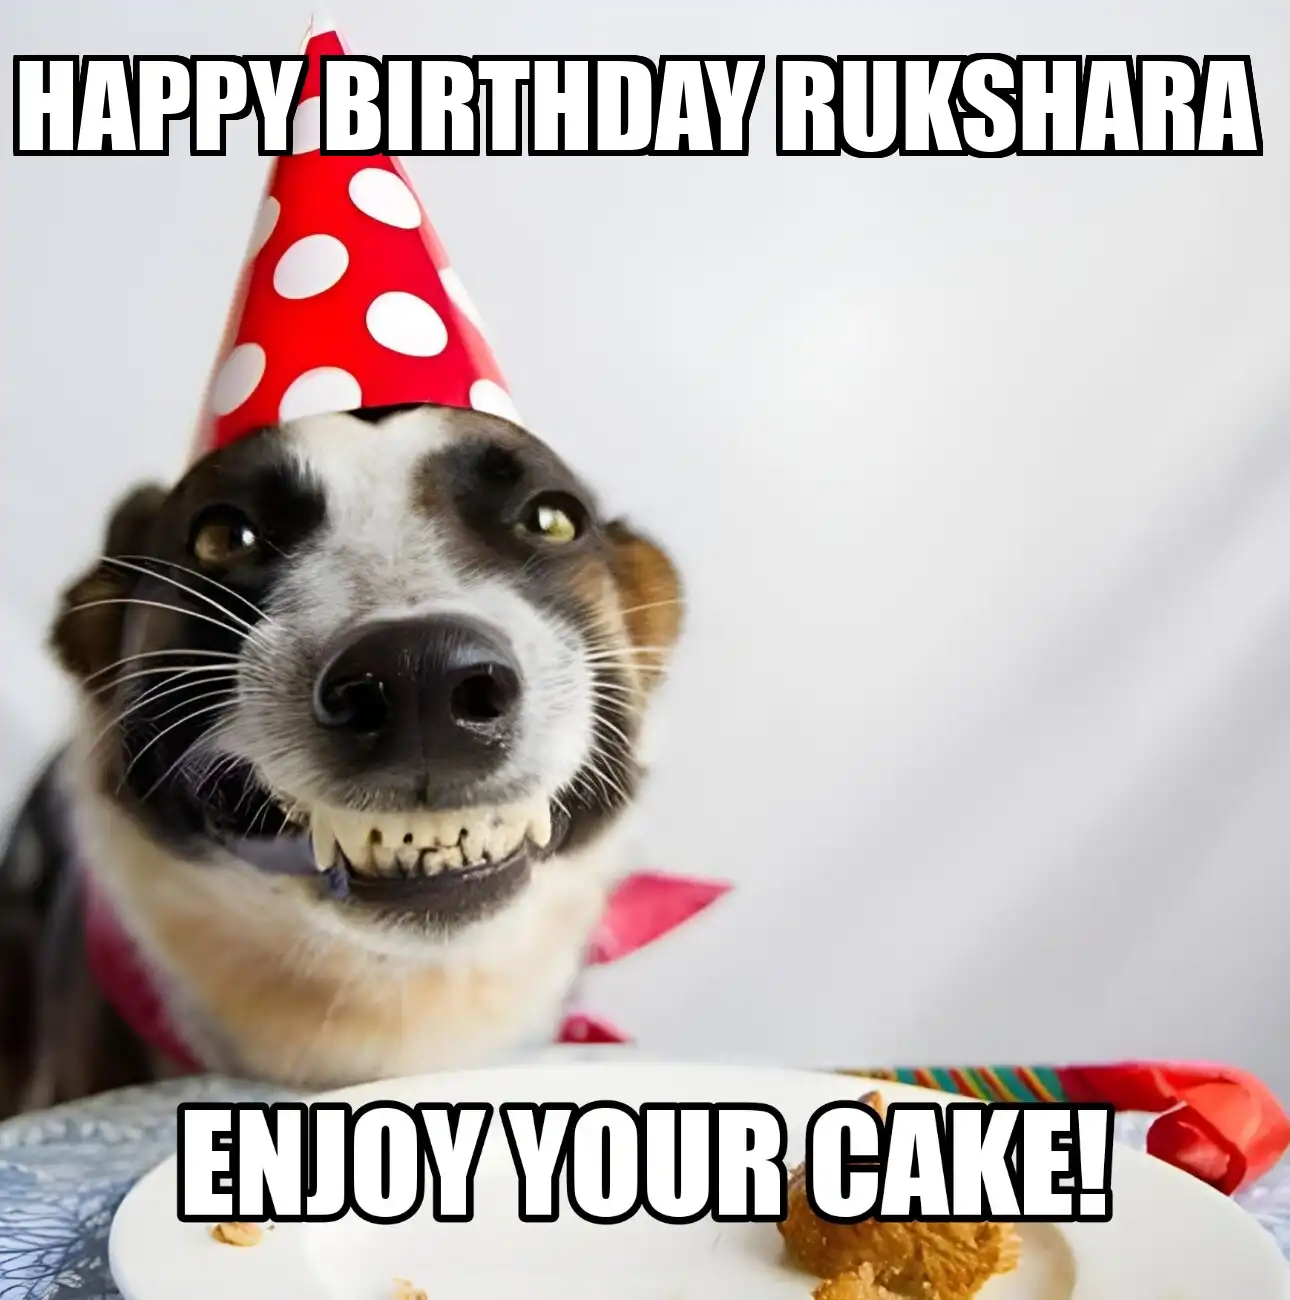 Happy Birthday Rukshara Enjoy Your Cake Dog Meme